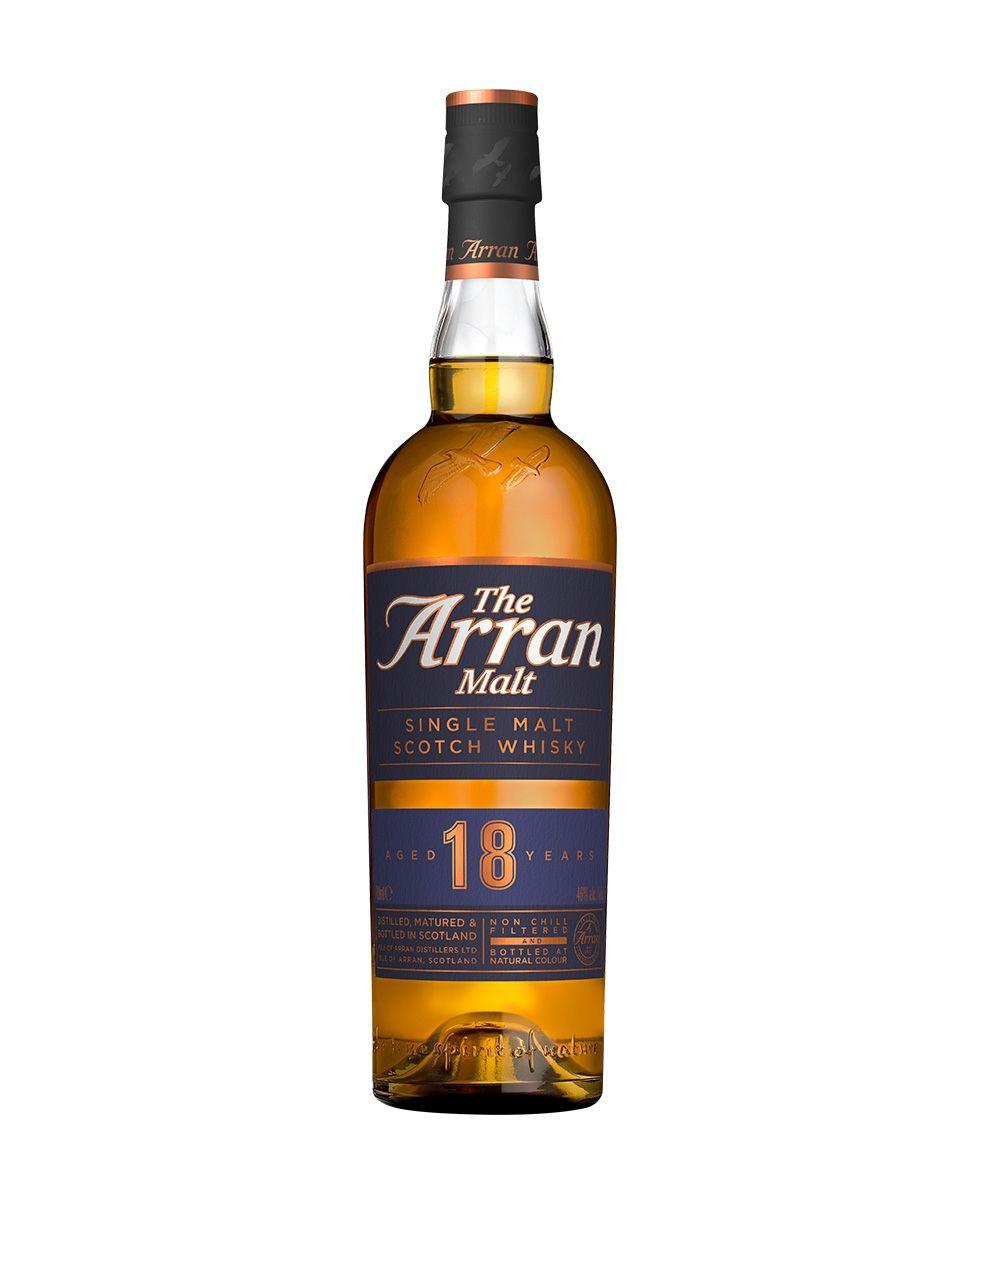 The Arran 18 Year Old Single Malt Scotch Whisky